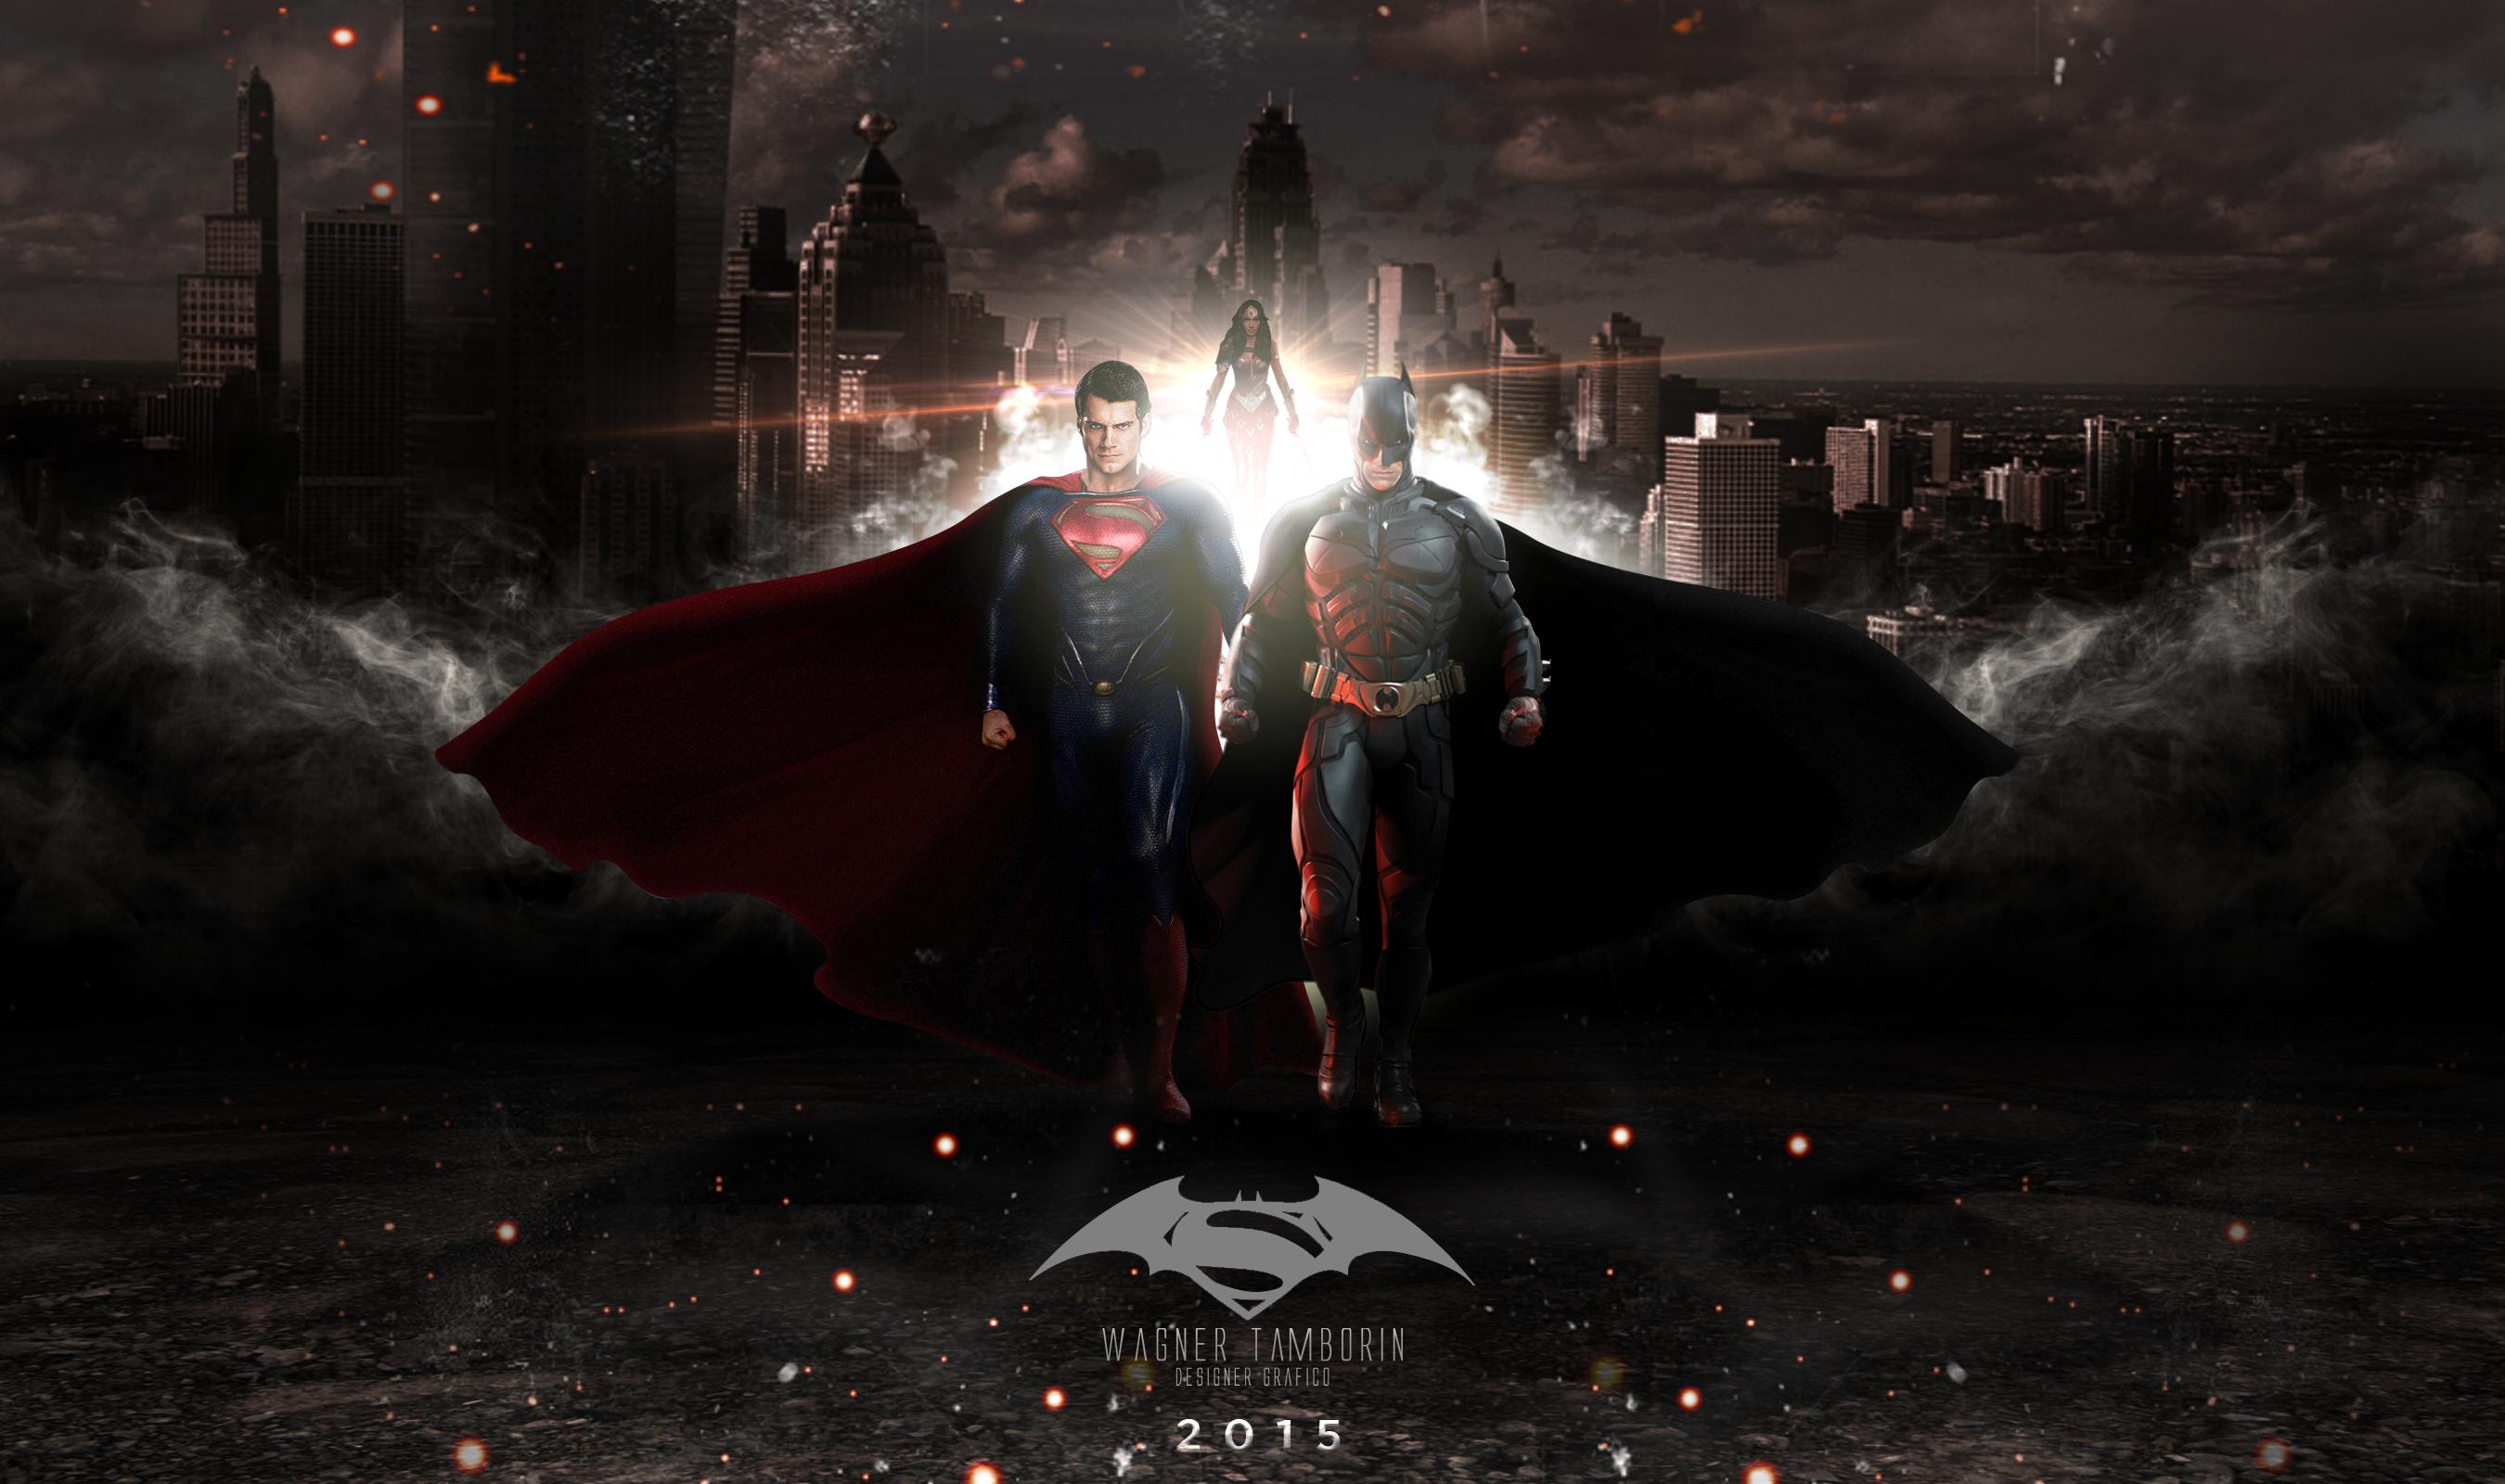 Download 2015 Movie Batman Vs Superman Wallpaper Image